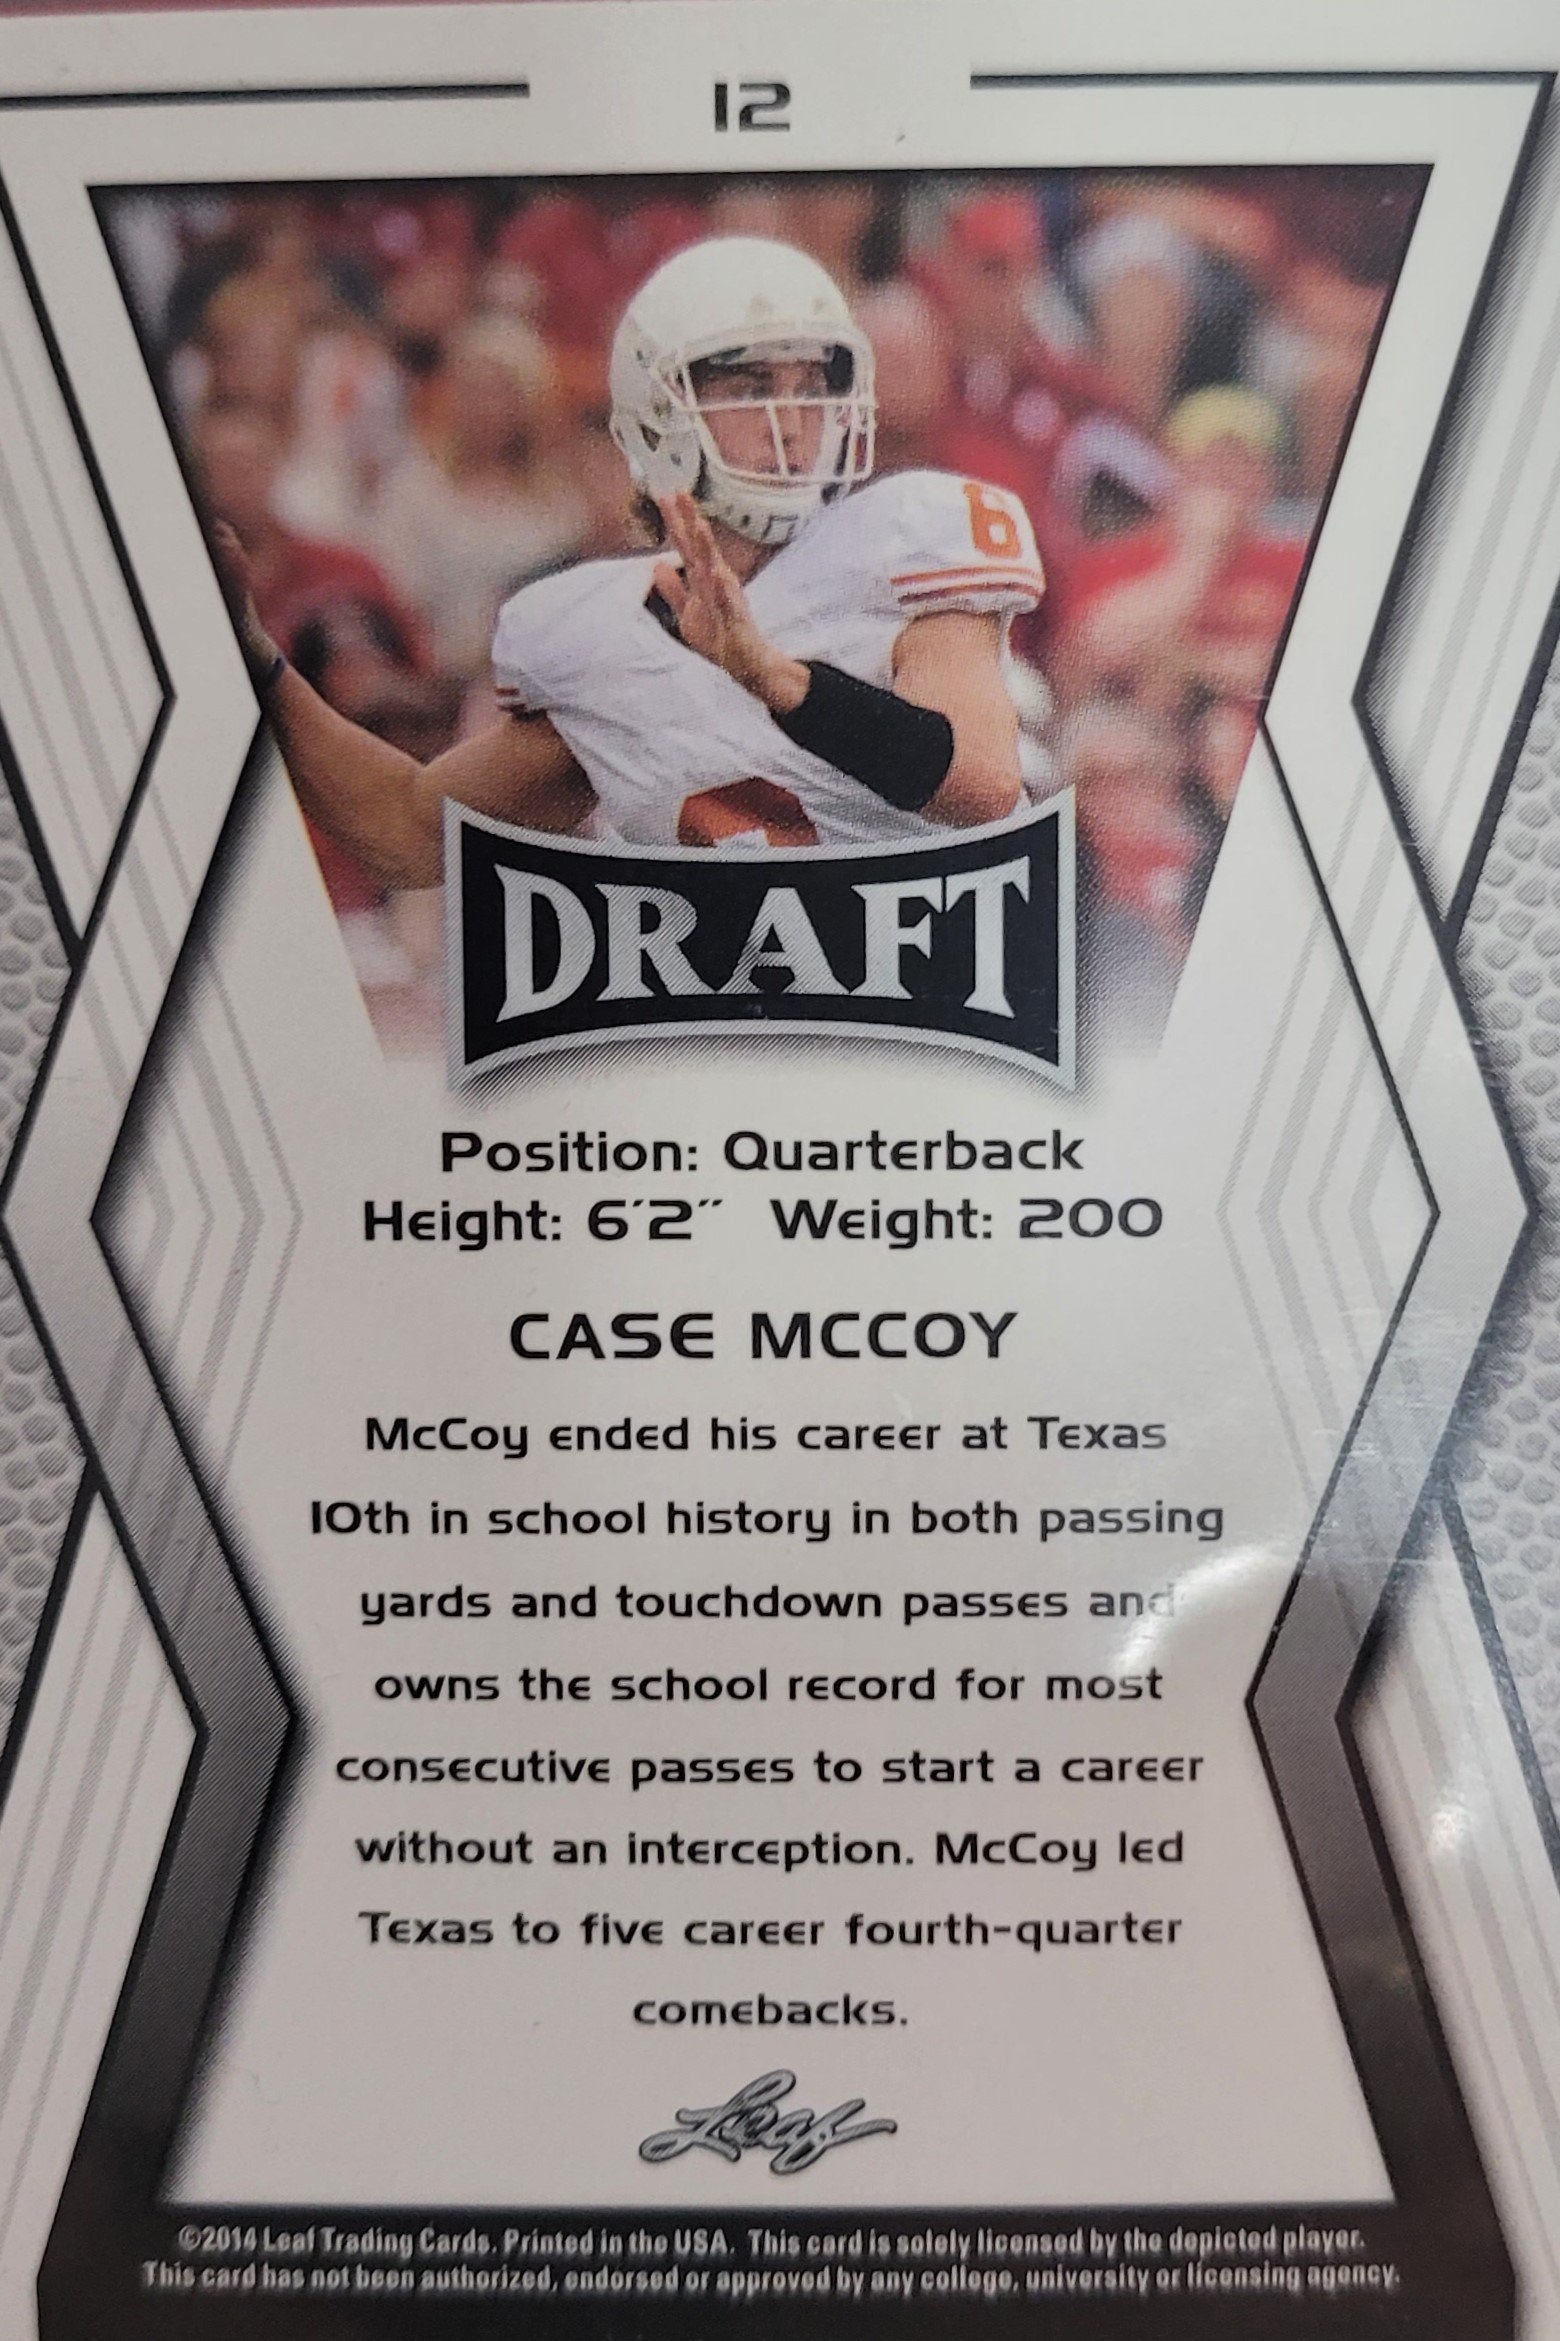 Case McCoy